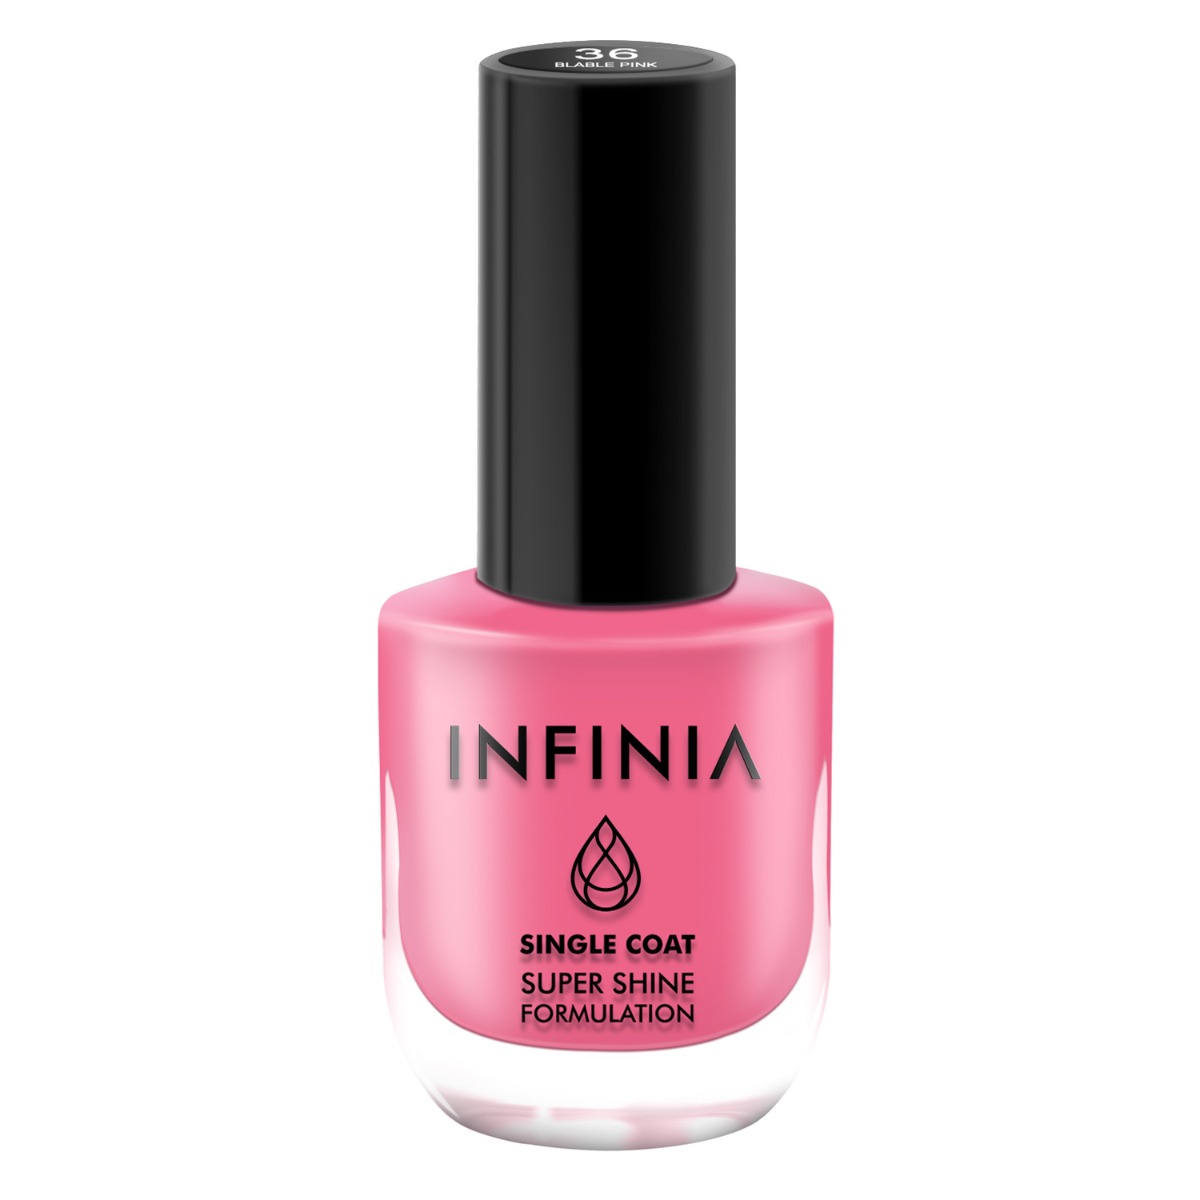 INFINIA Single Coat Super Shine Nail Polish With Ultra High Gloss, 12ml-036 Blable Pink